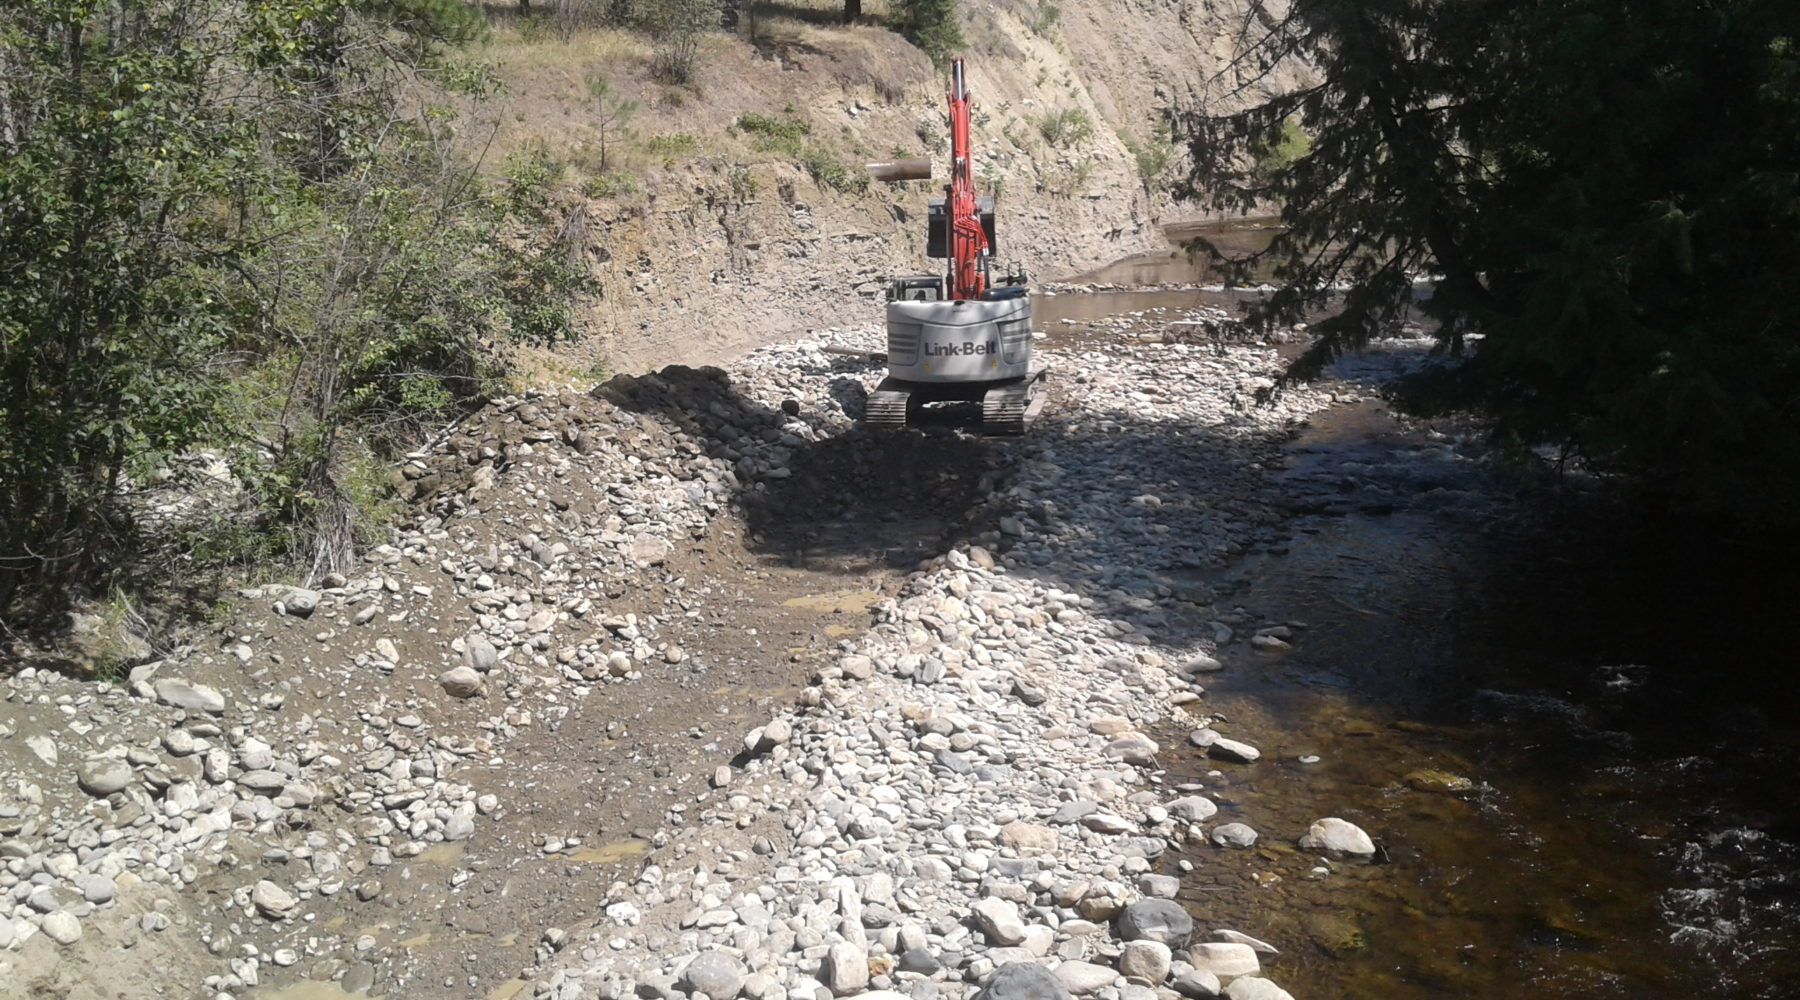 Mission Creek Greenway Bridges/Abutment Protection Repairs